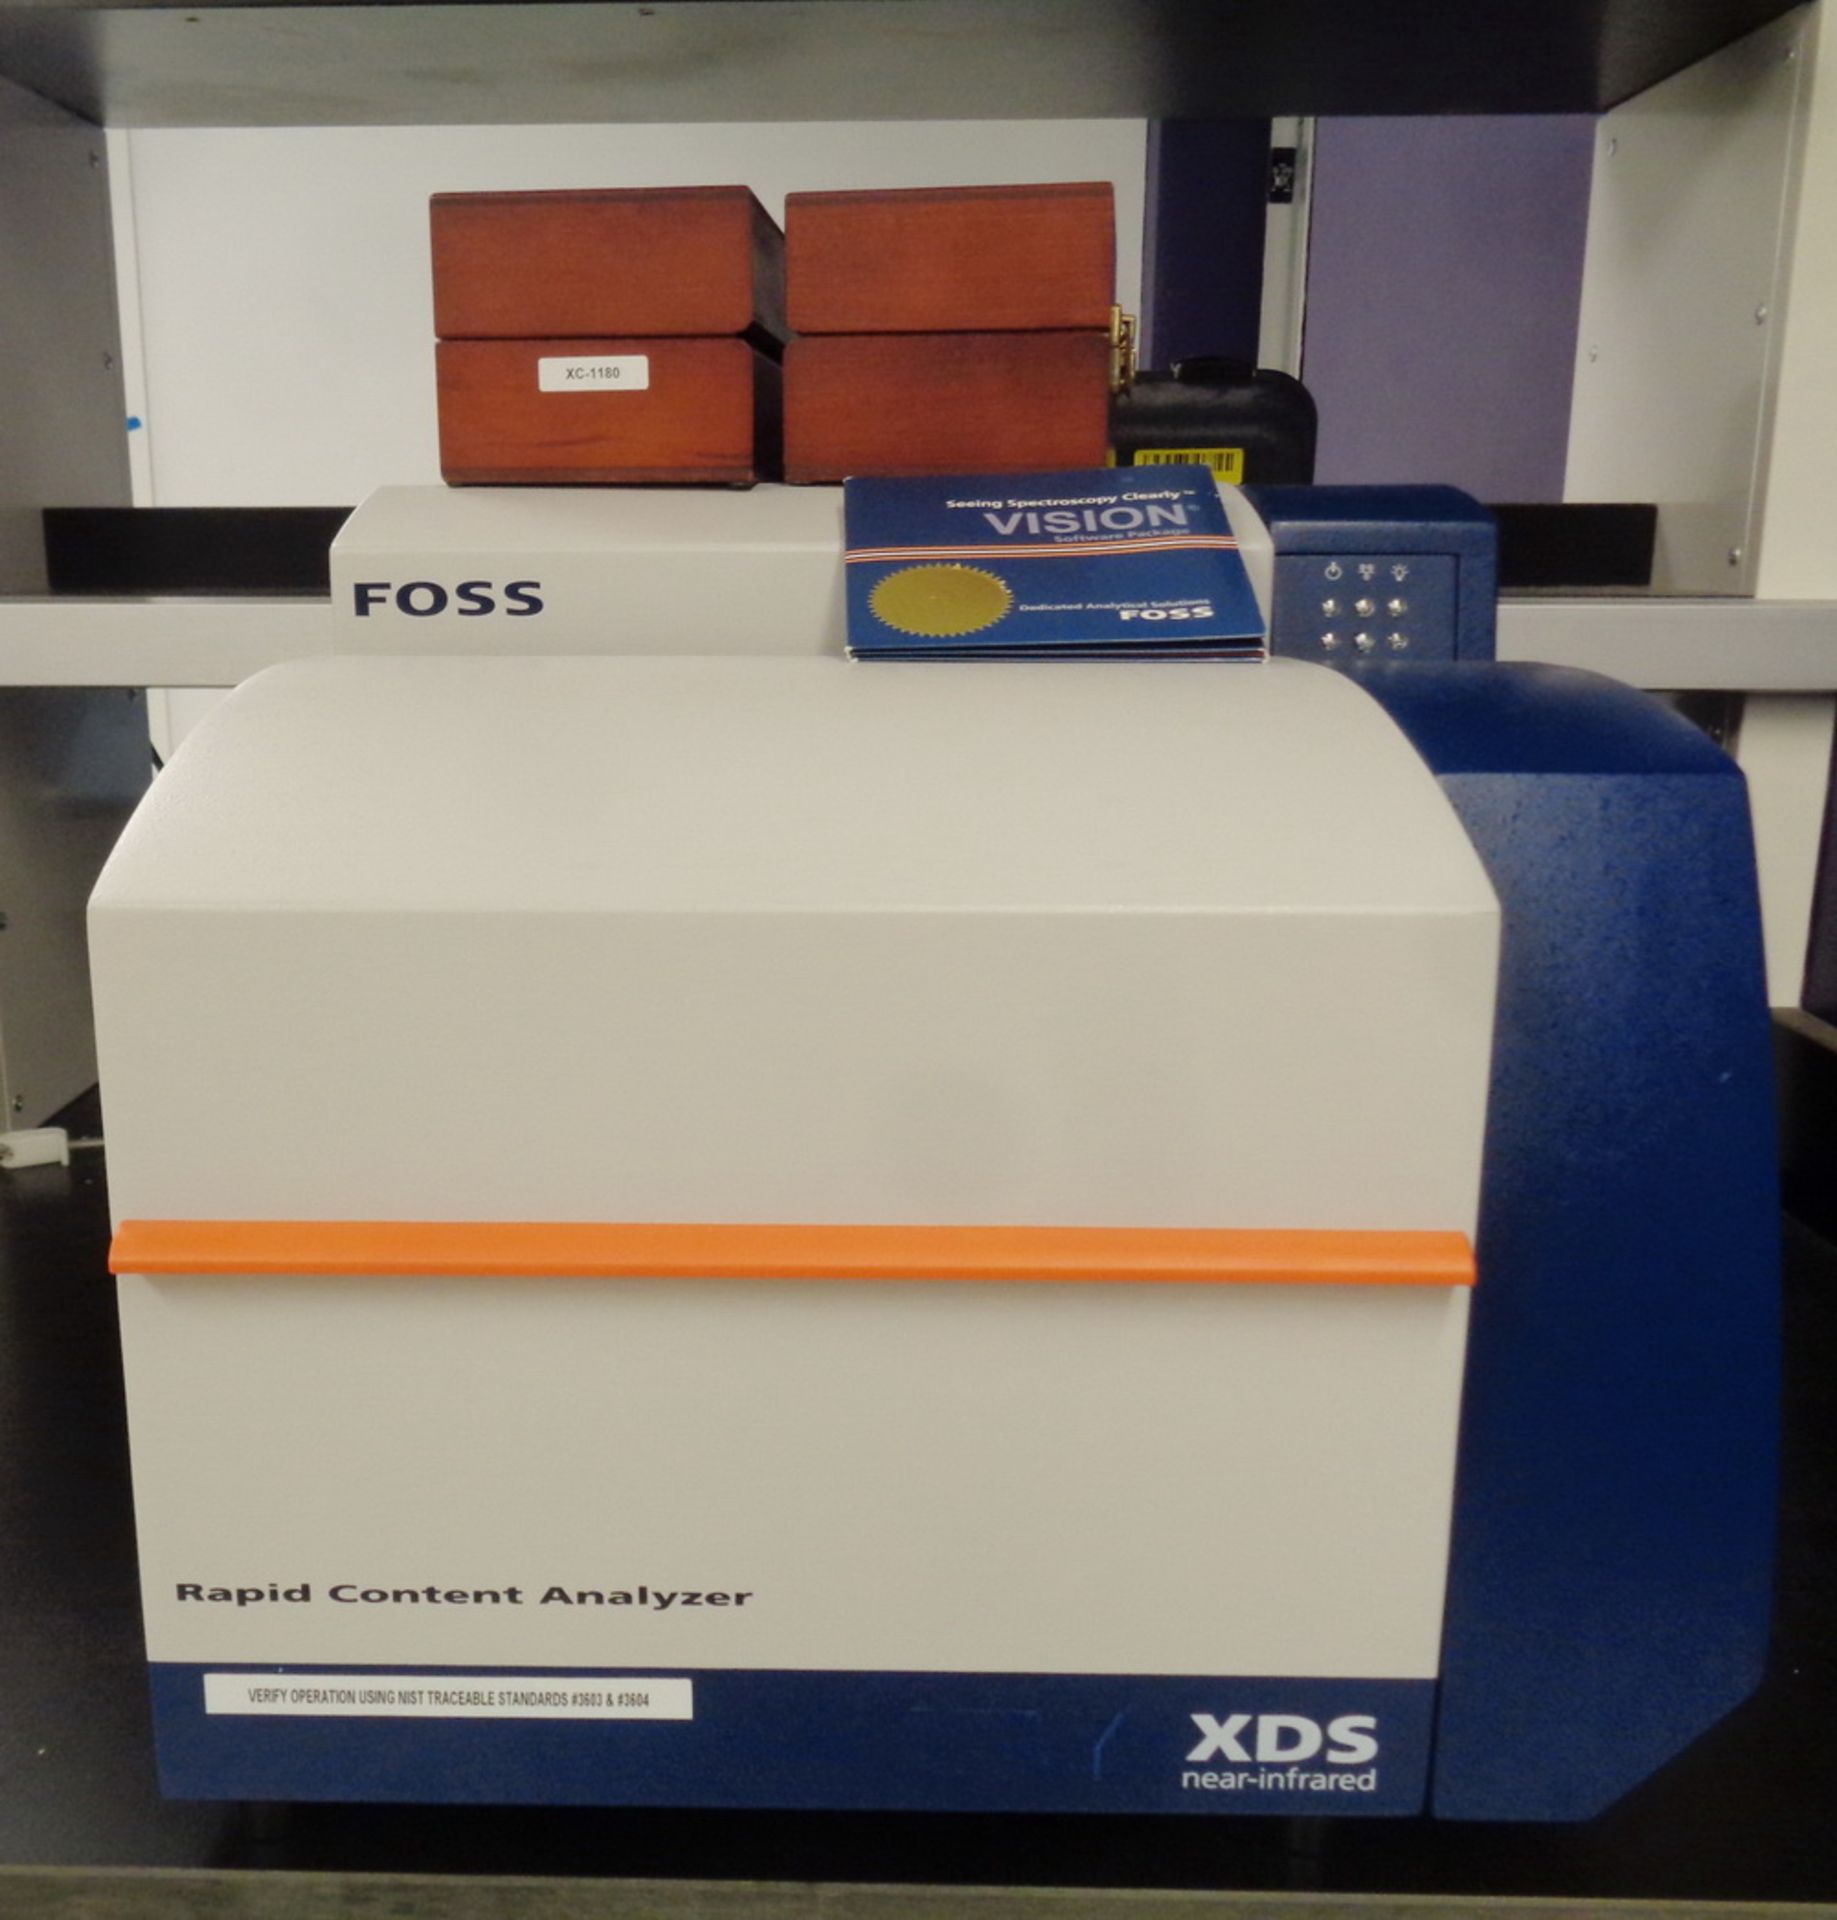 Foss Rapid Content Analyzer, XDS near-infared, S/N 3013-1009. With Foss XDS Monochrometer